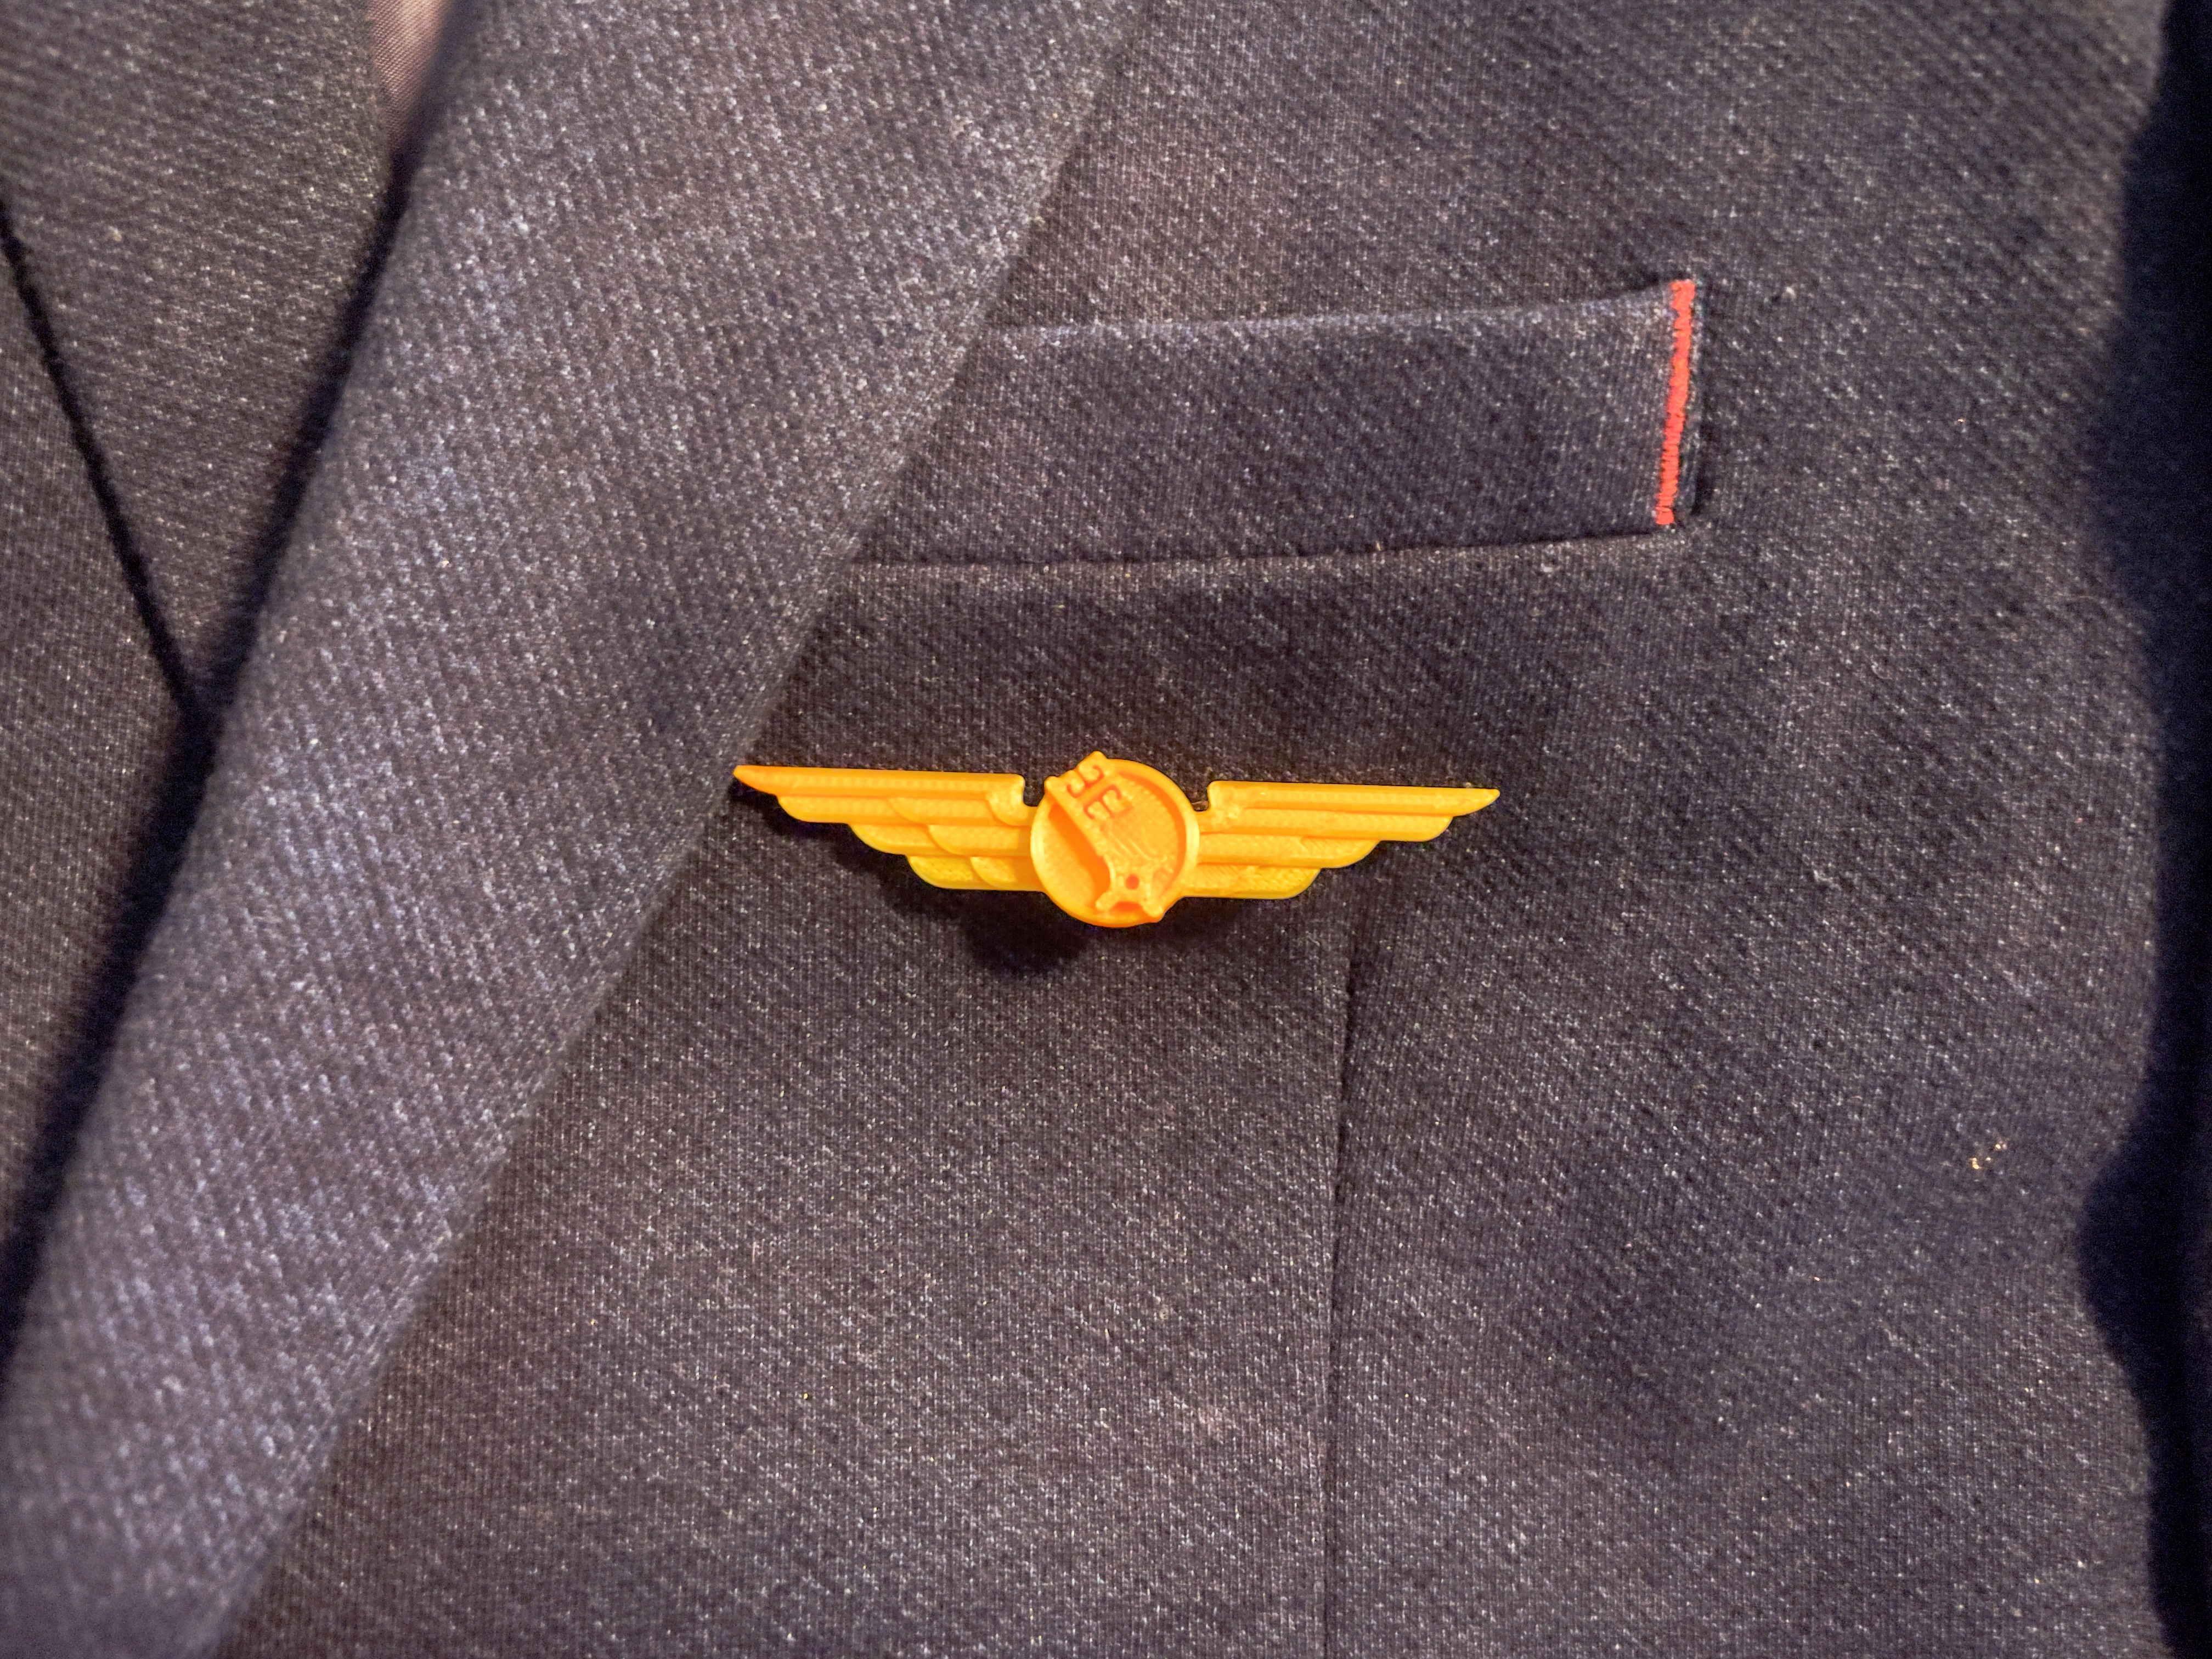 Pilot's Wings Pin (Bremen Edition)